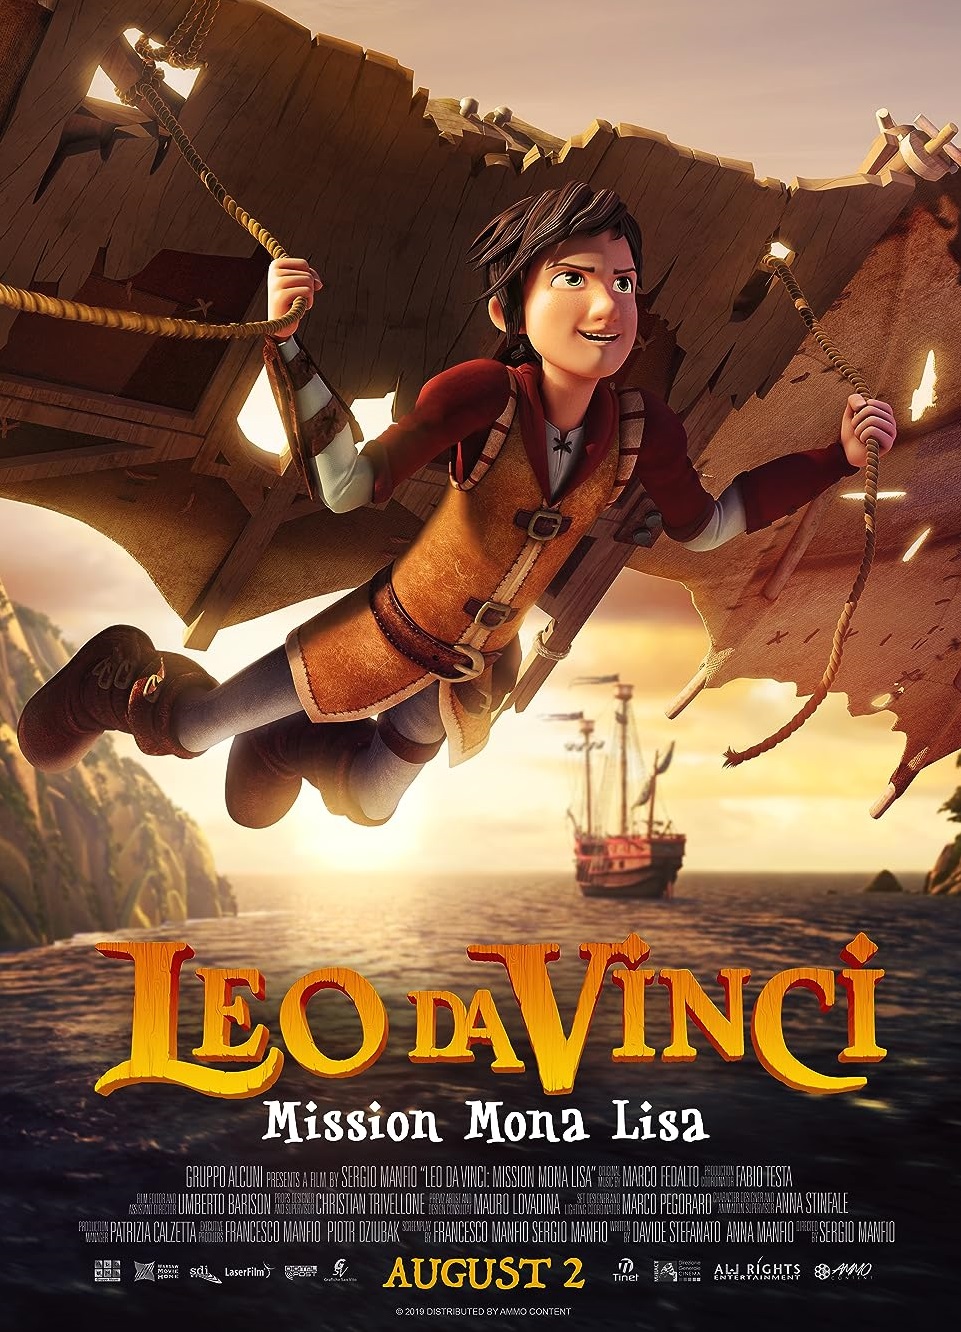 Leo Da Vinci: Mission Mona Lisa 2019 Tamil Dubbed Animation Movie Online